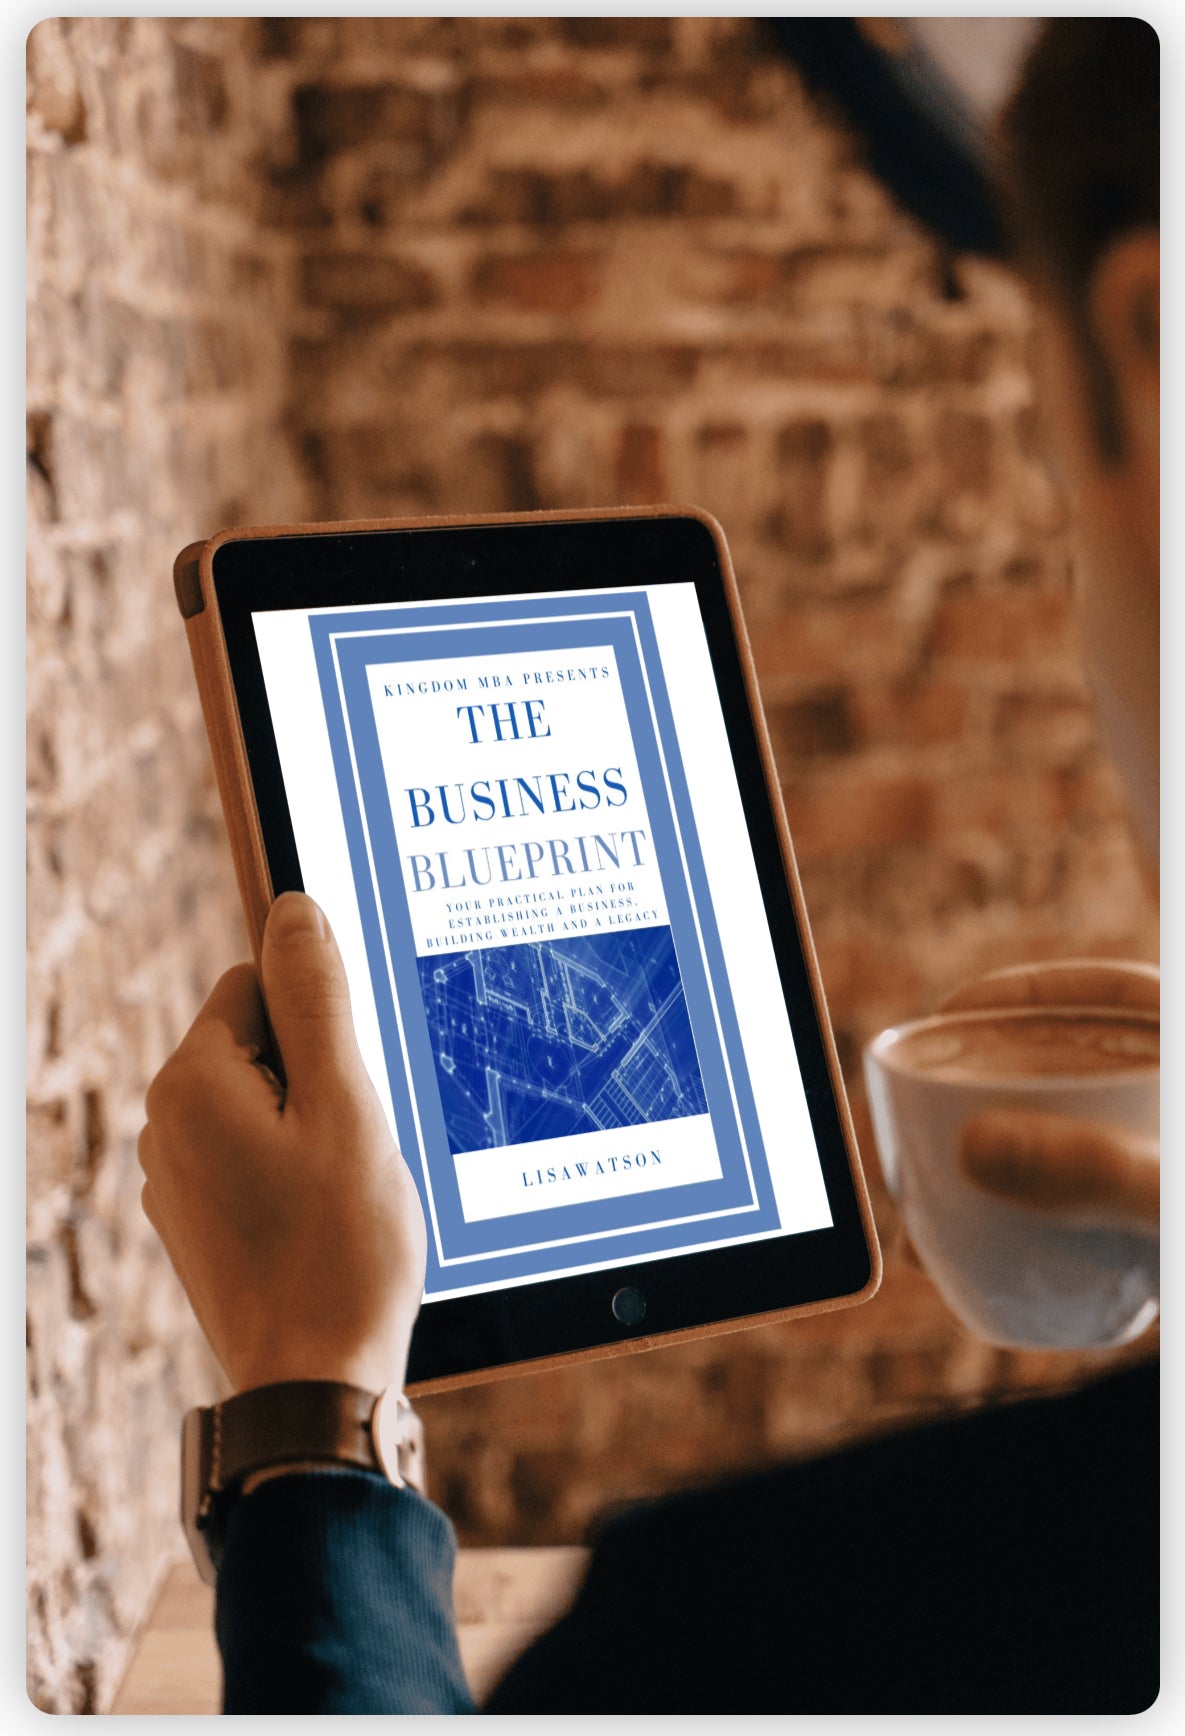 The Business BluePrint